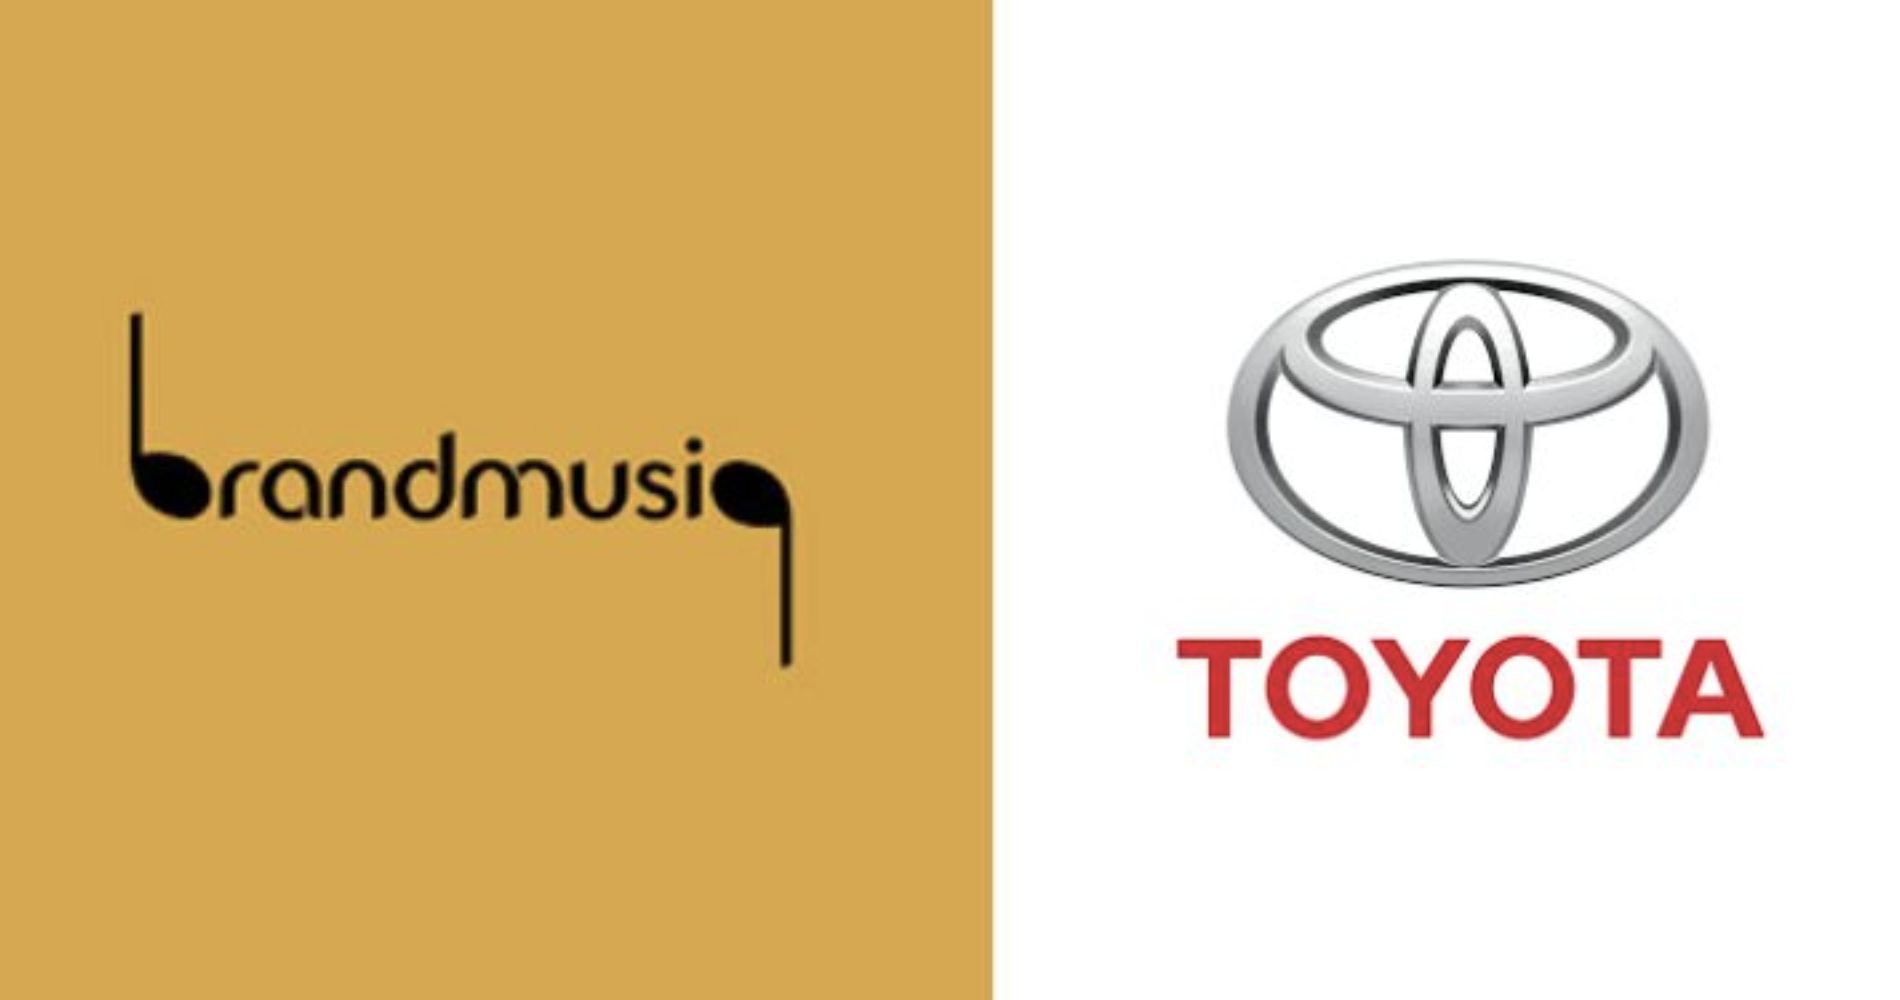 BrandMusiq crafts sonic identity for Toyota